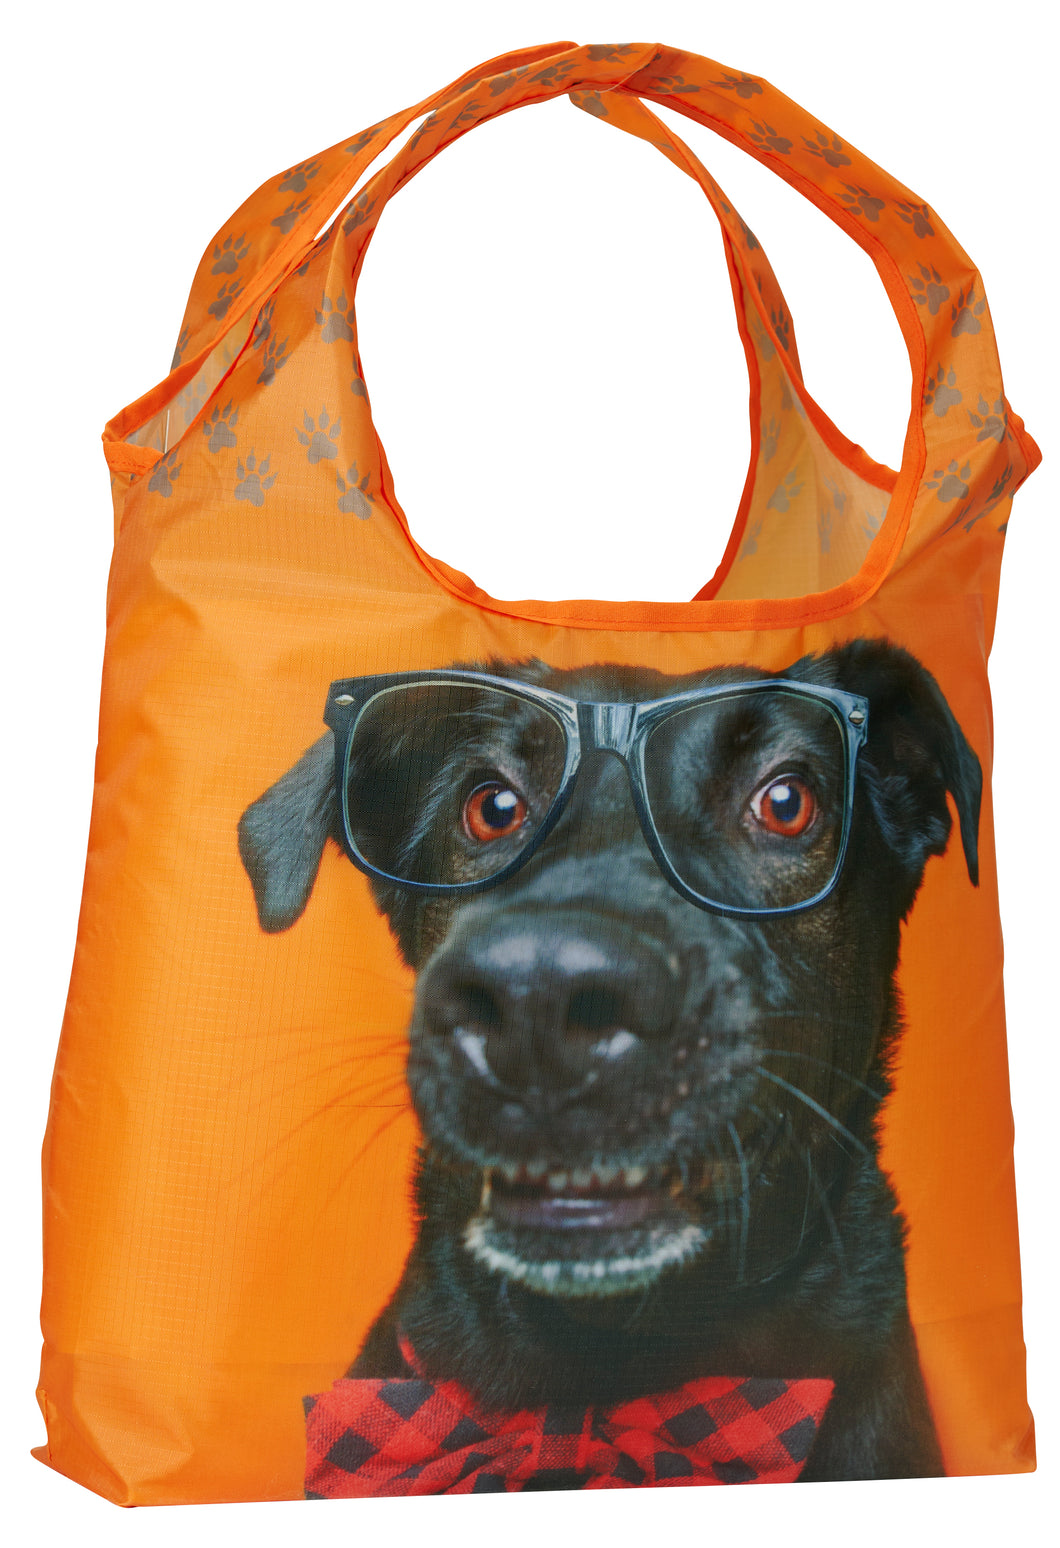 O-WITZ Reusable Shopping Bag - Dog Glasses